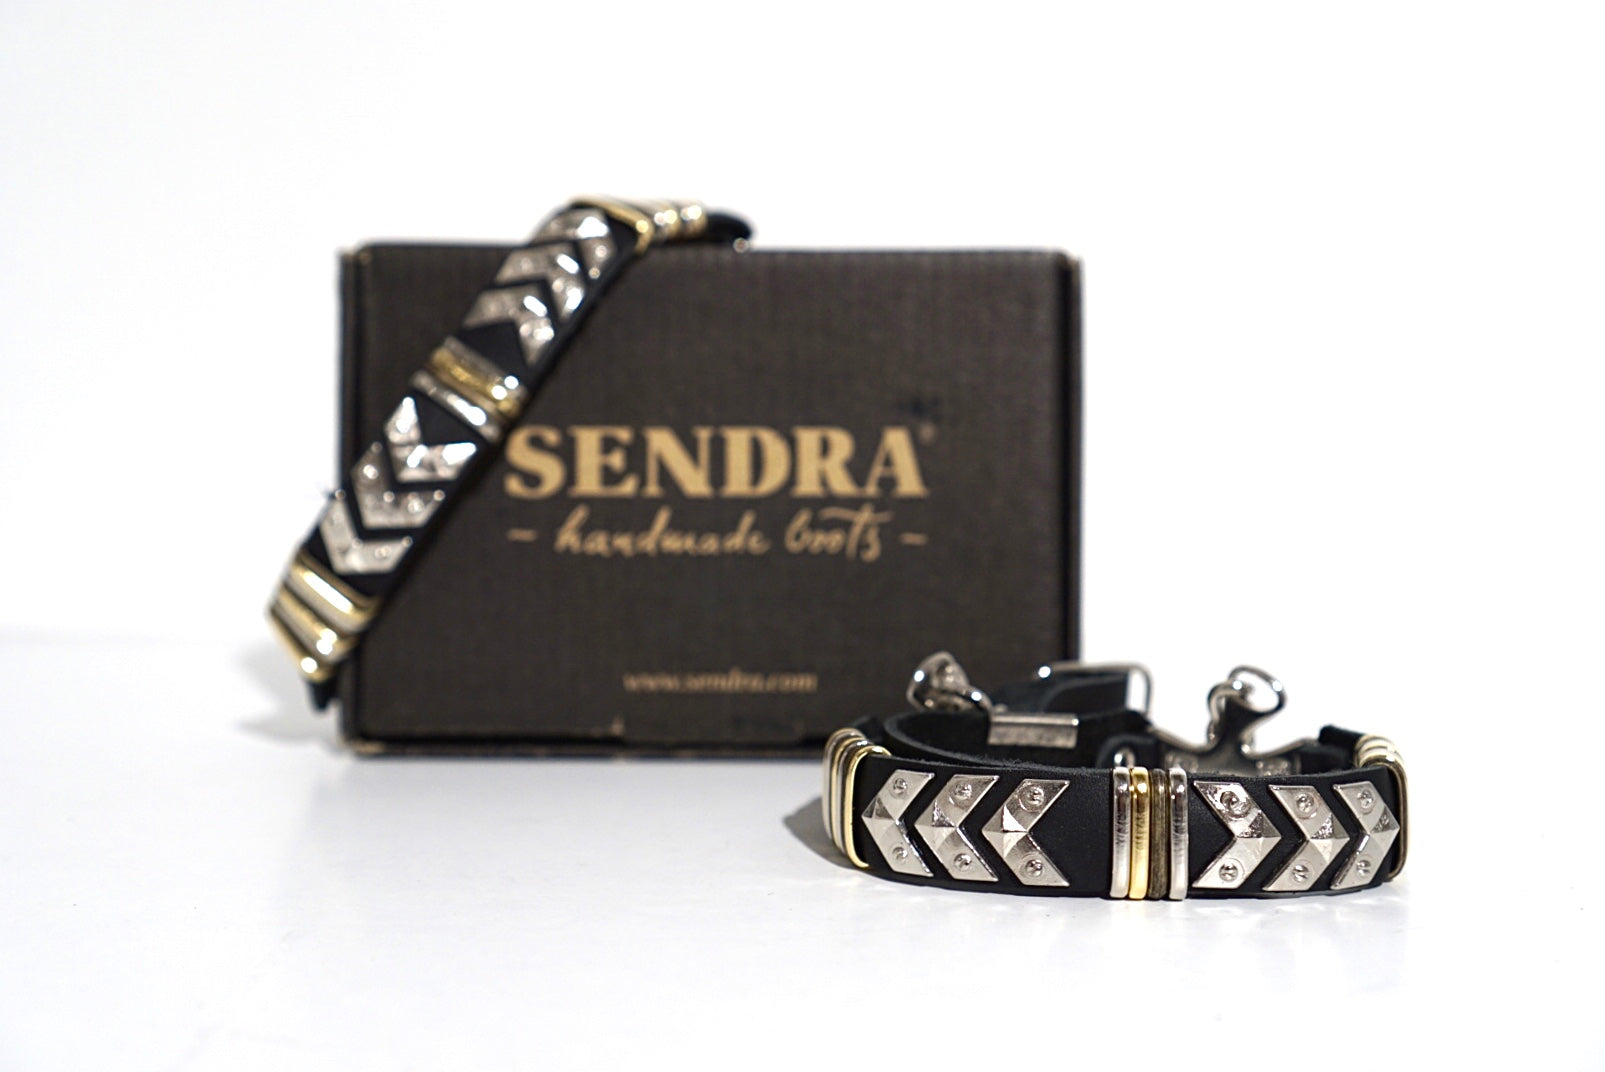 Sendra spores - black with silver/gold colored arrows